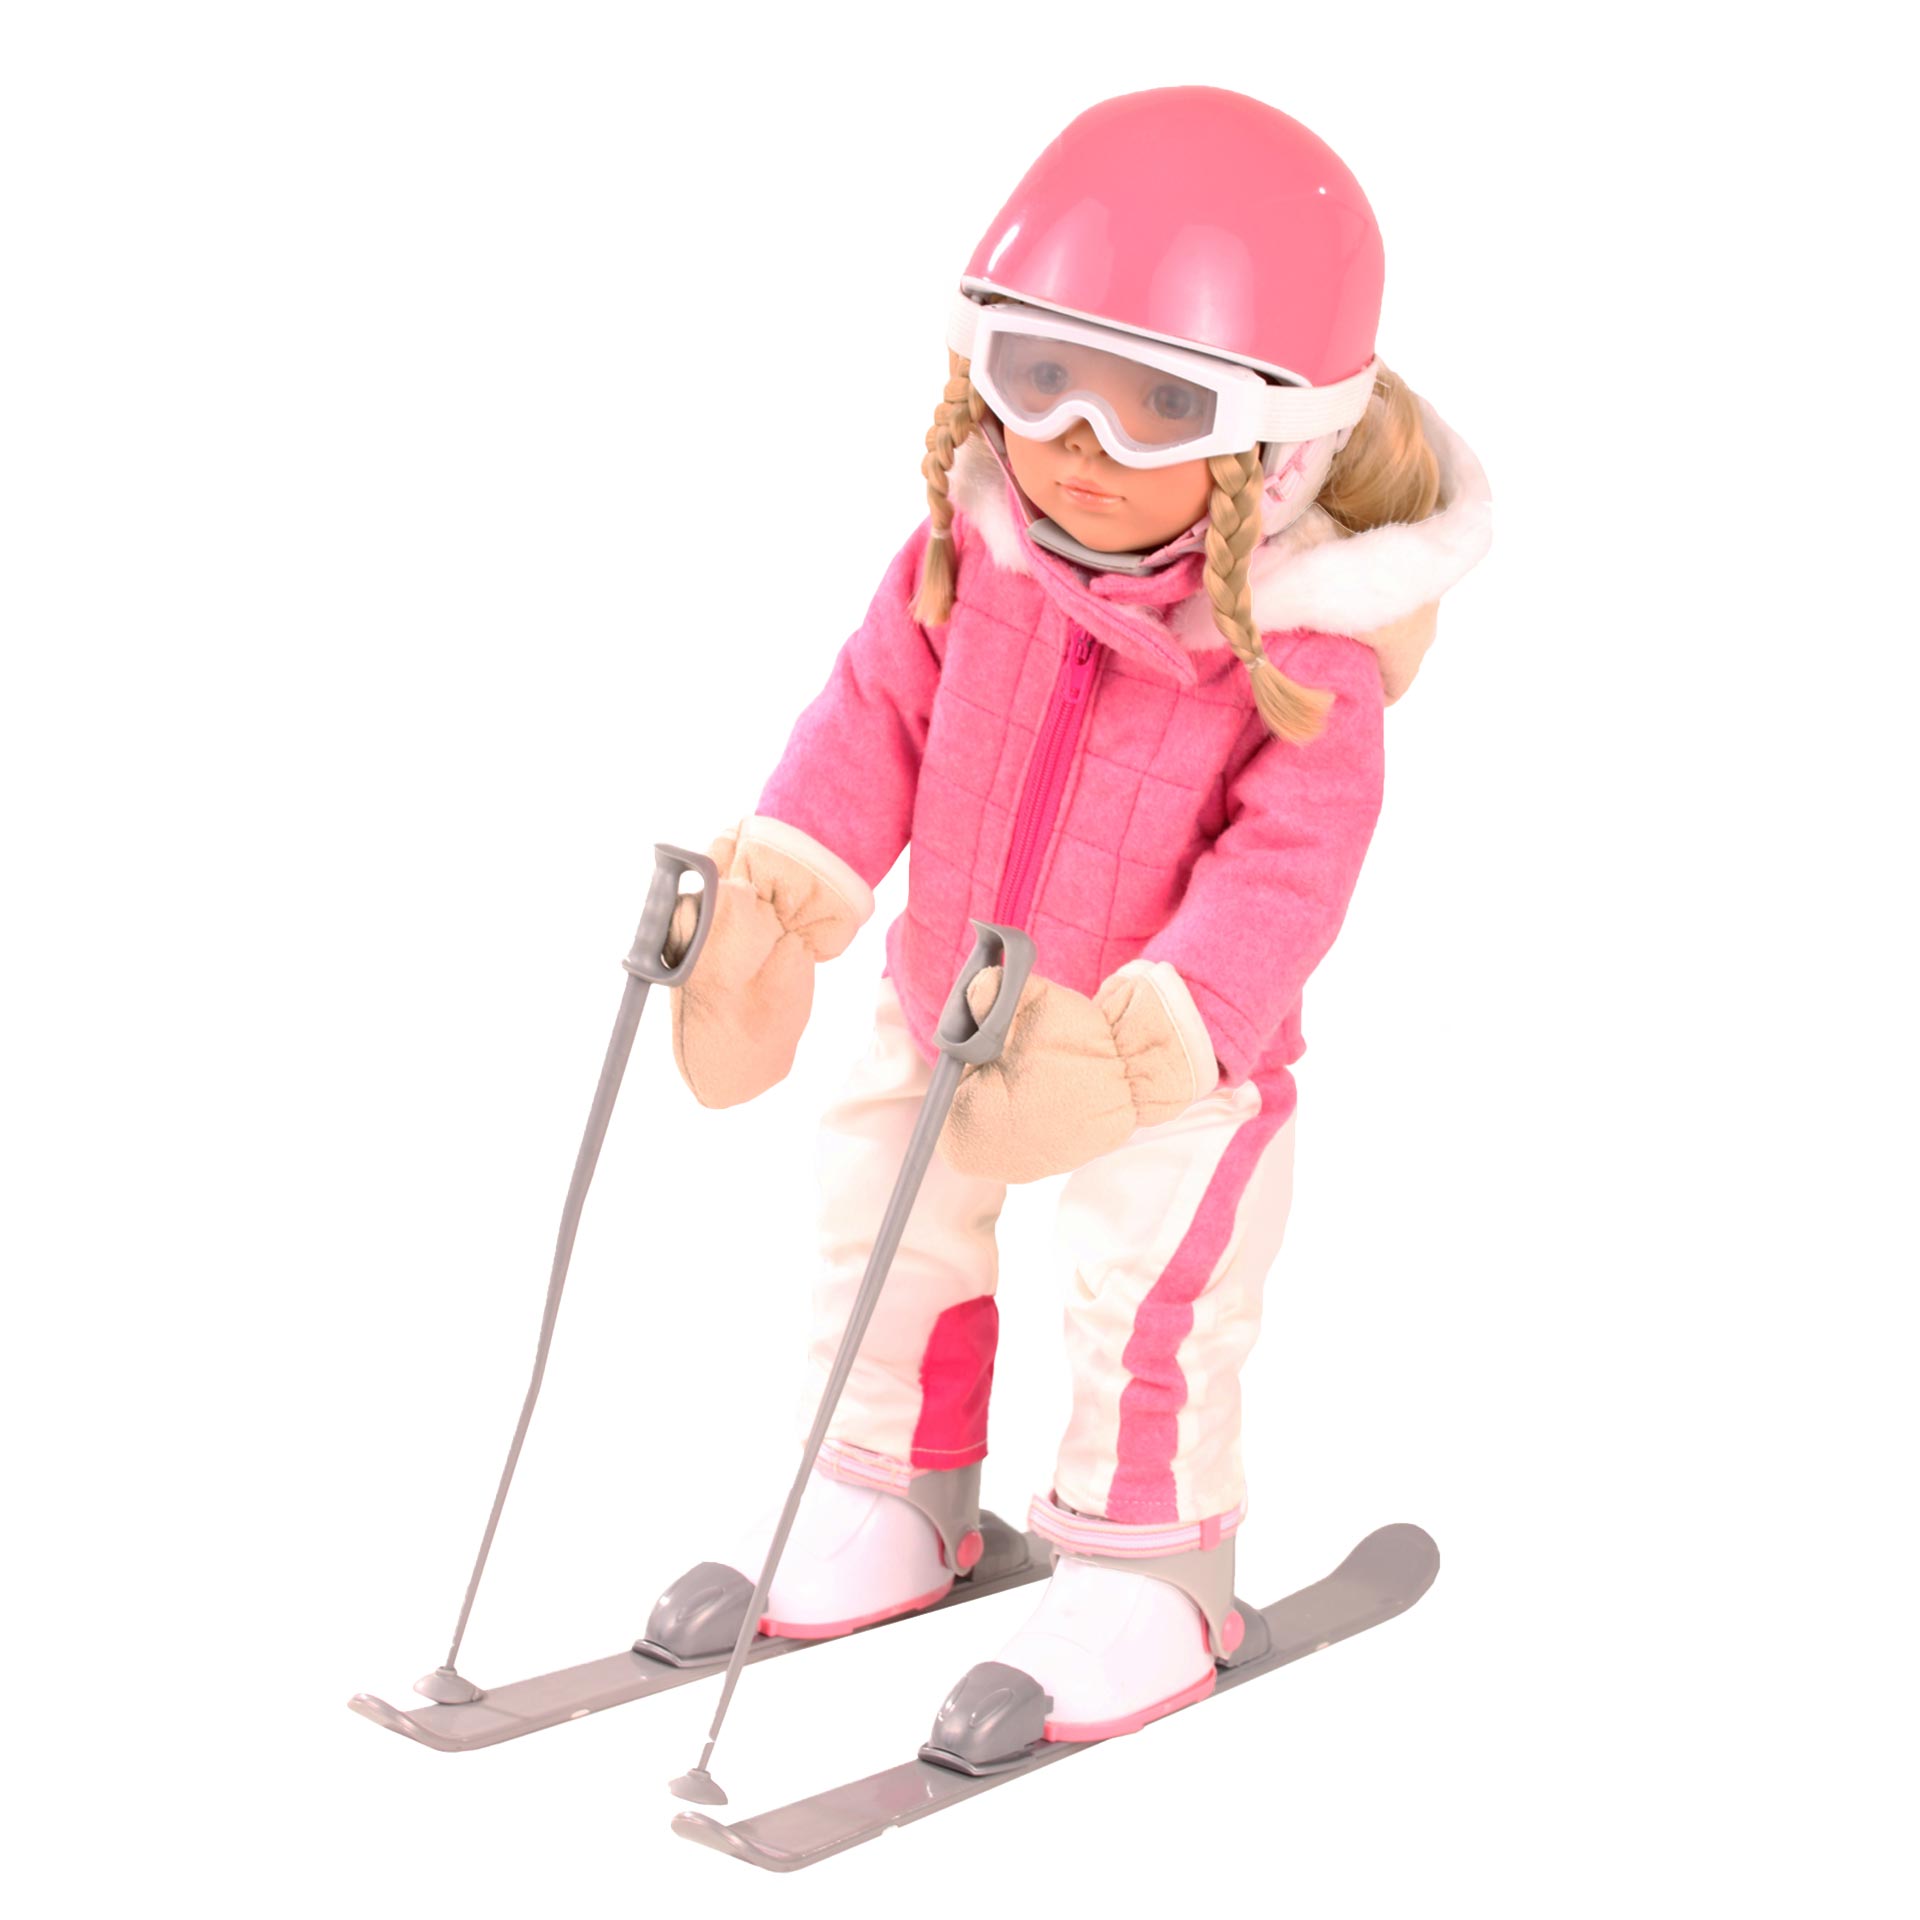 skianzug-alpin-bekleidung-goetz-handschuhe-skihose-winterjacke-plueschkragen-ski-skistoecke-skihelm-skibrille